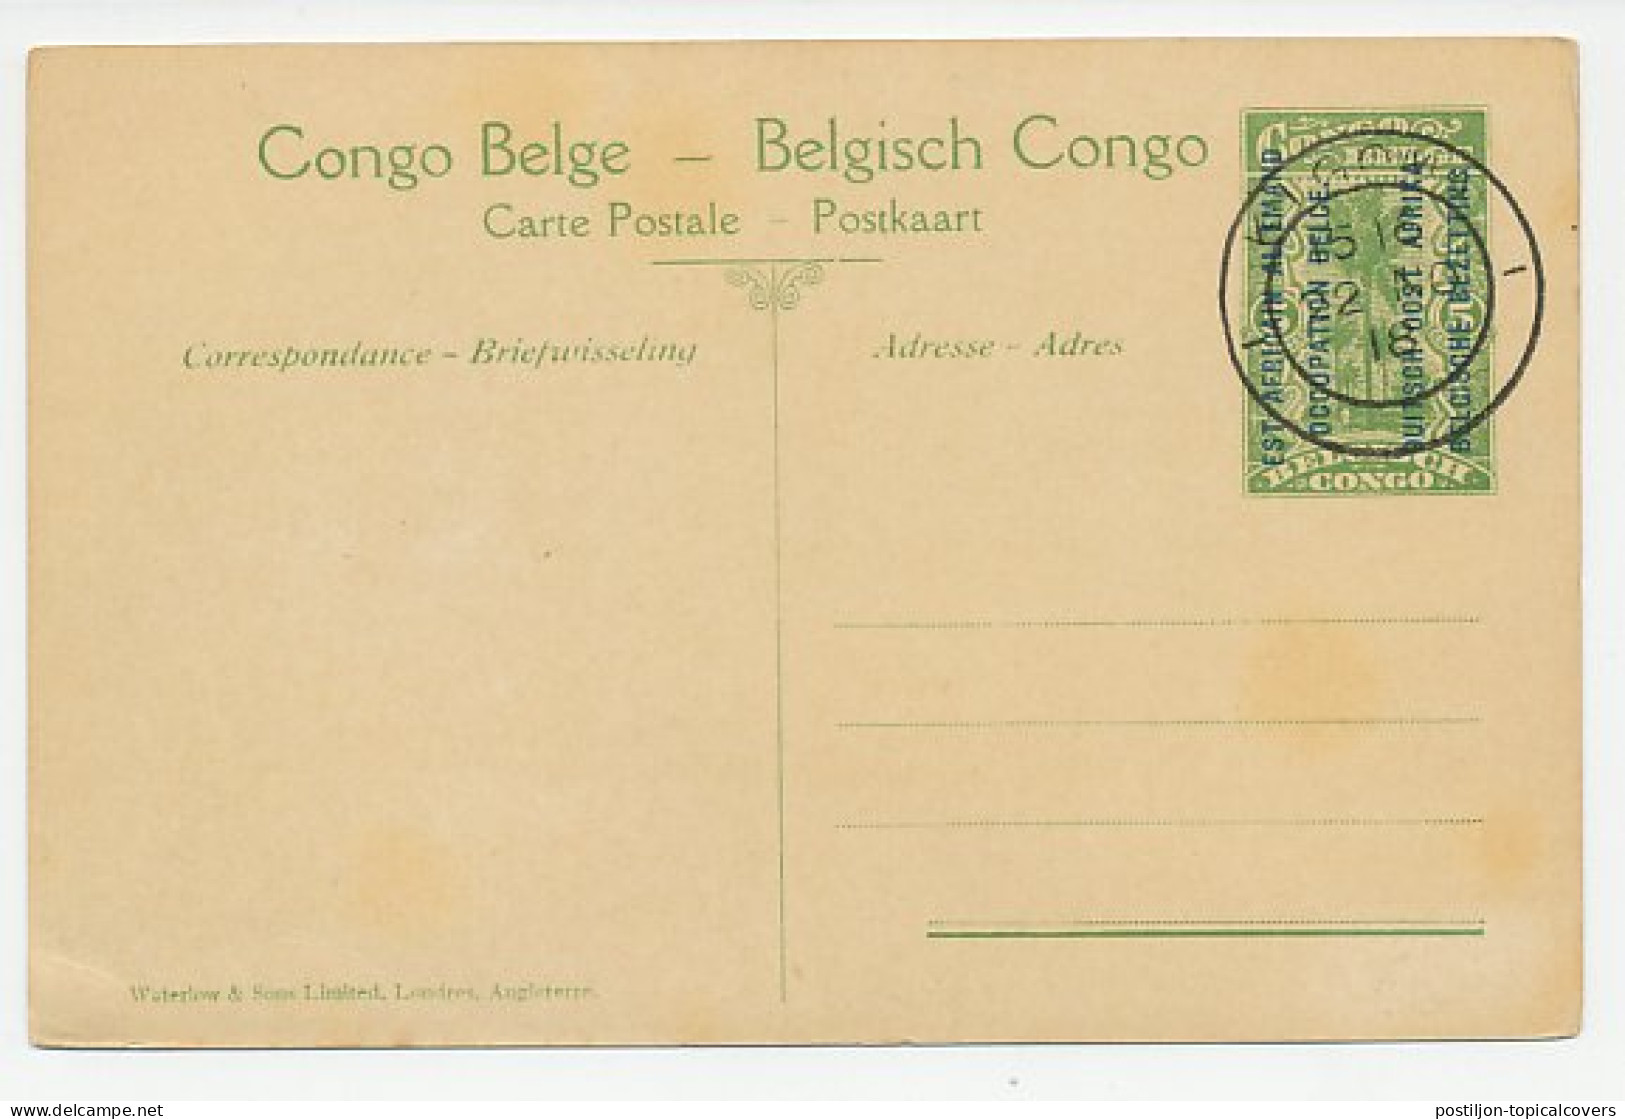 Postal Stationery Belgian Congo / German East Africa 1918 Kigali - Watuzi Group - Indianer